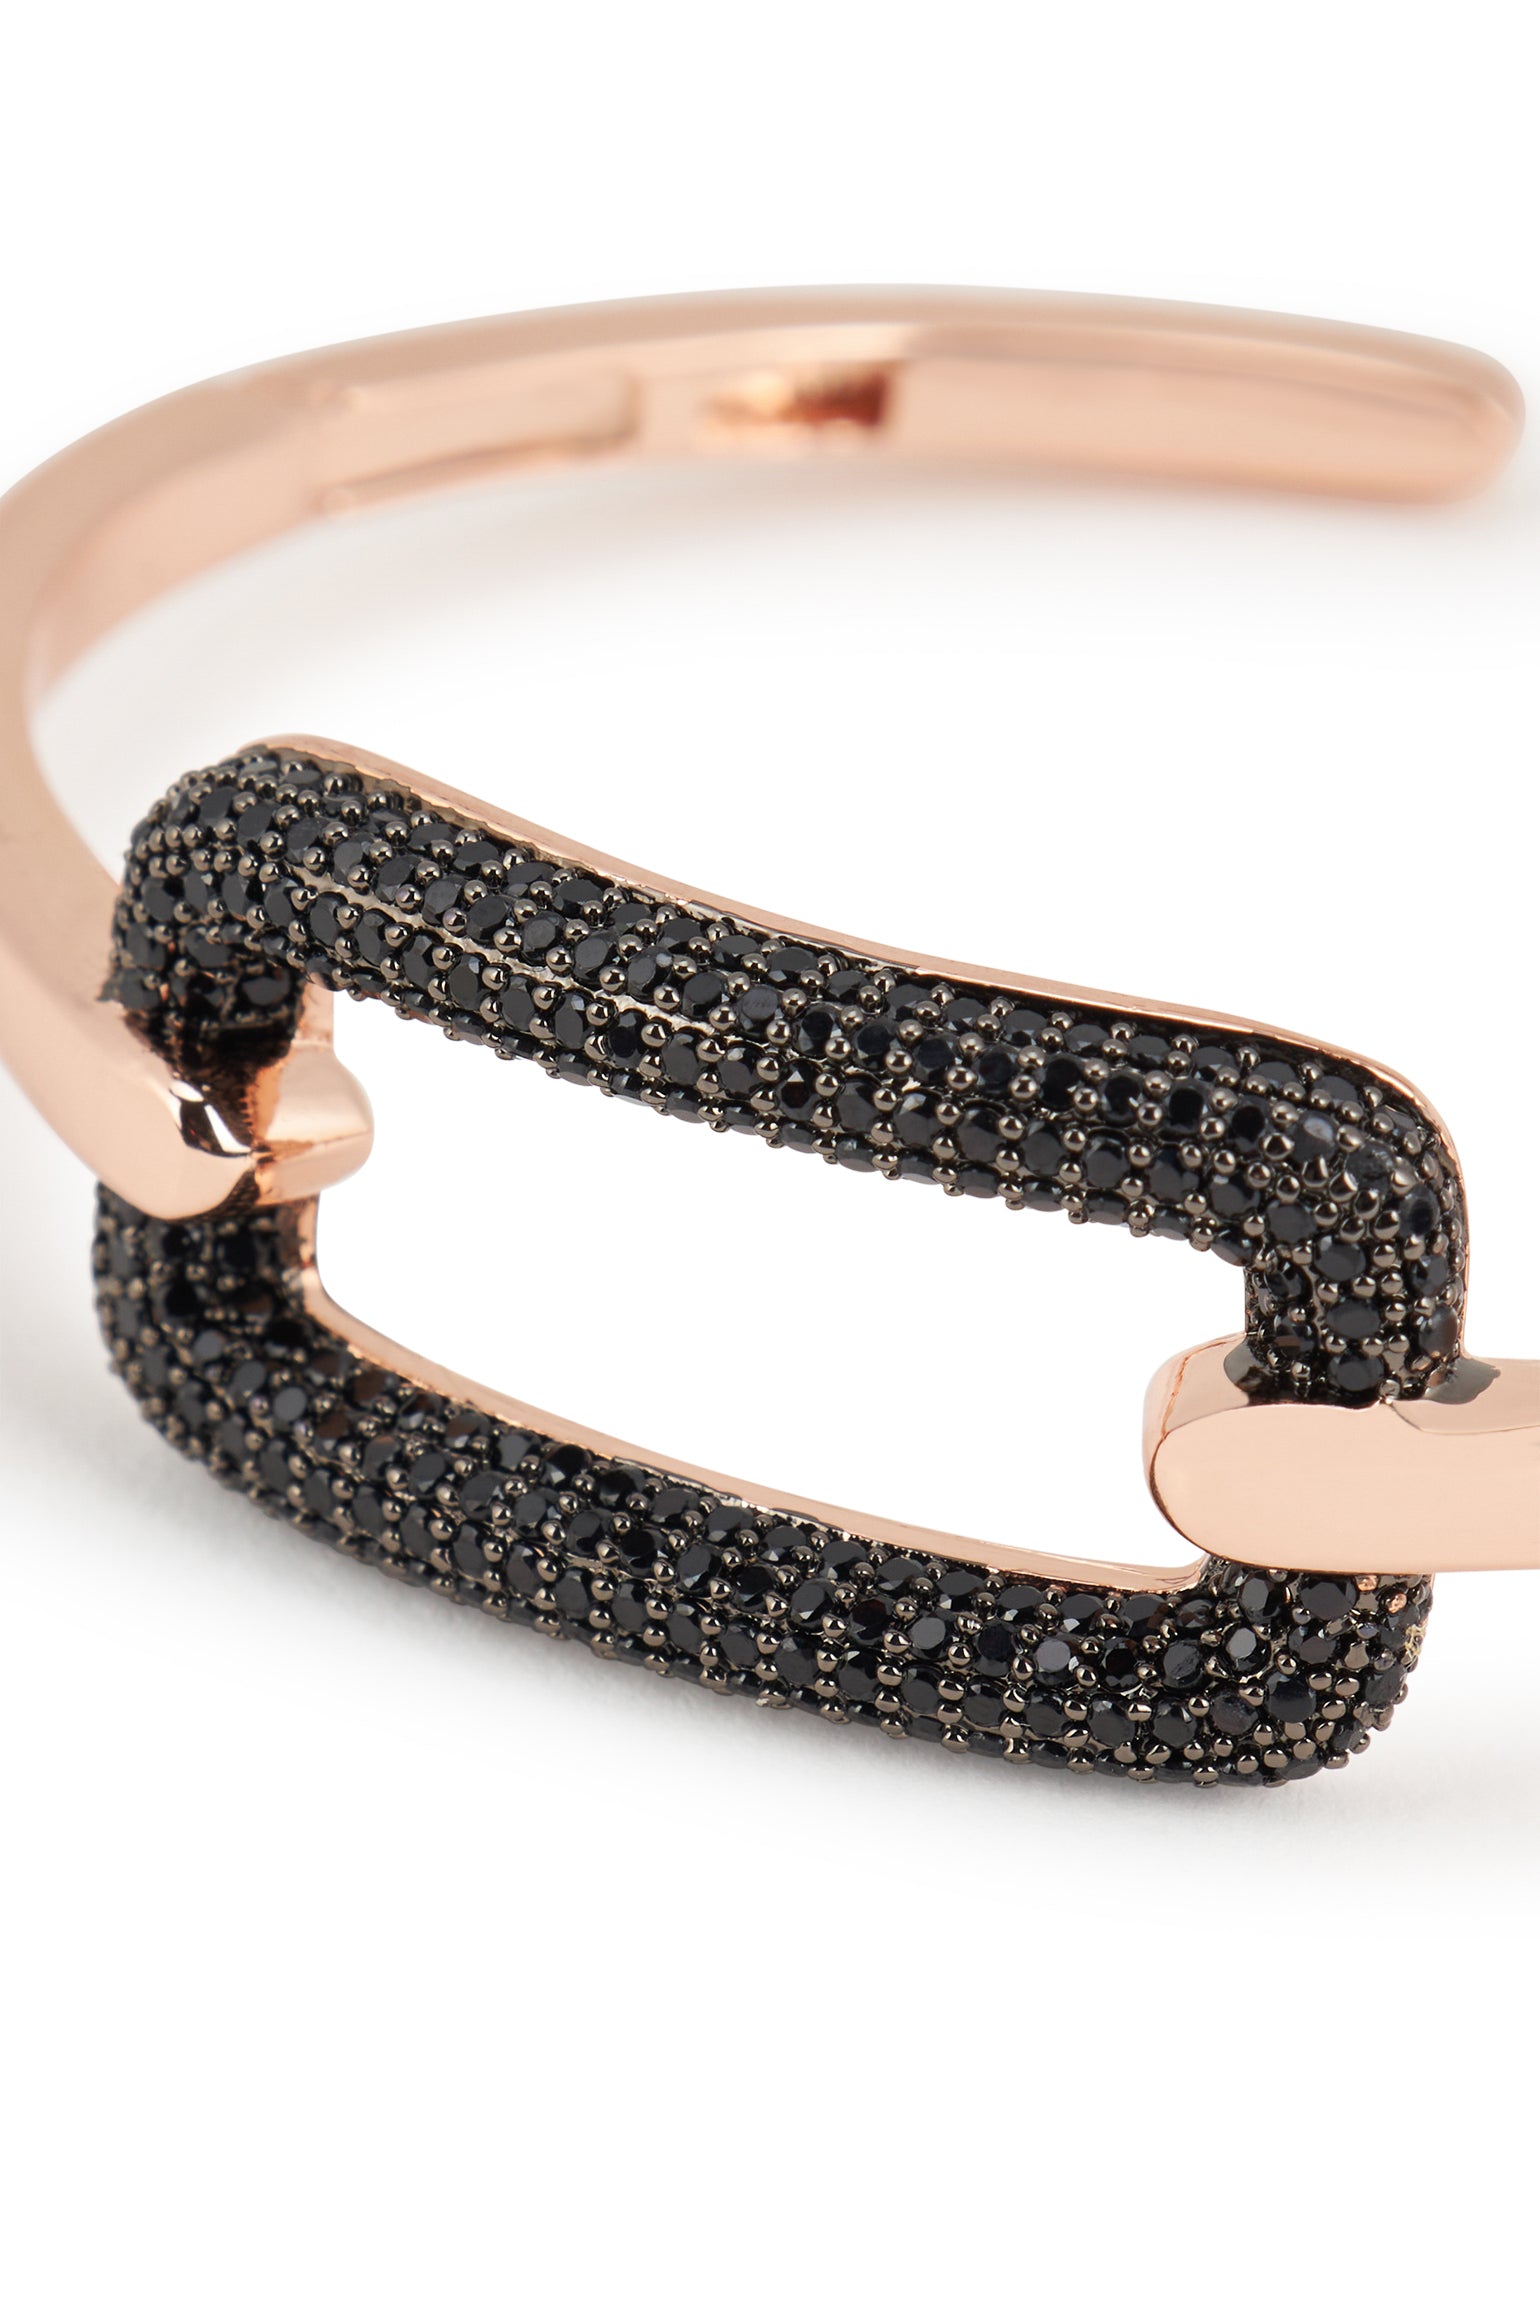 MELUSINA BIJOUX Rigid Gold Bracelet with Black Zircons